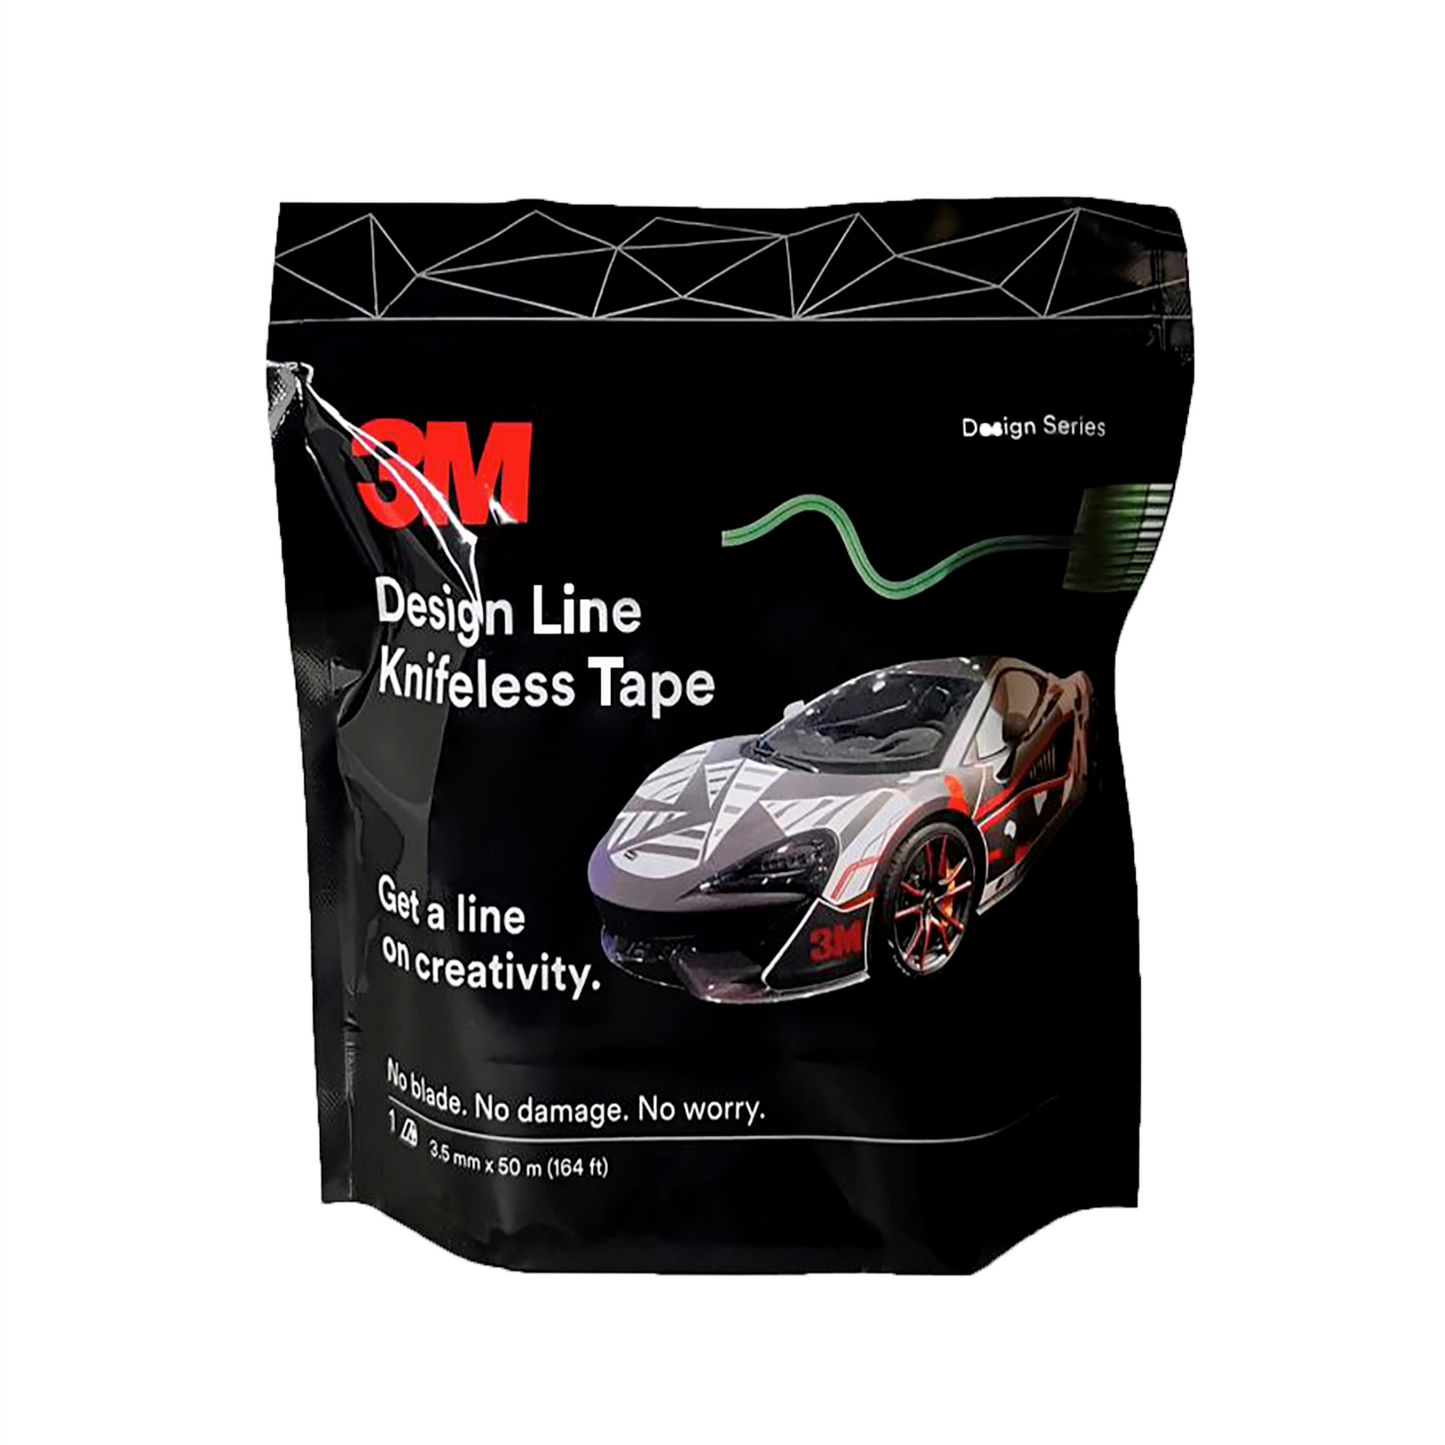 3M Knifeless Tape Design Line Series (50m)